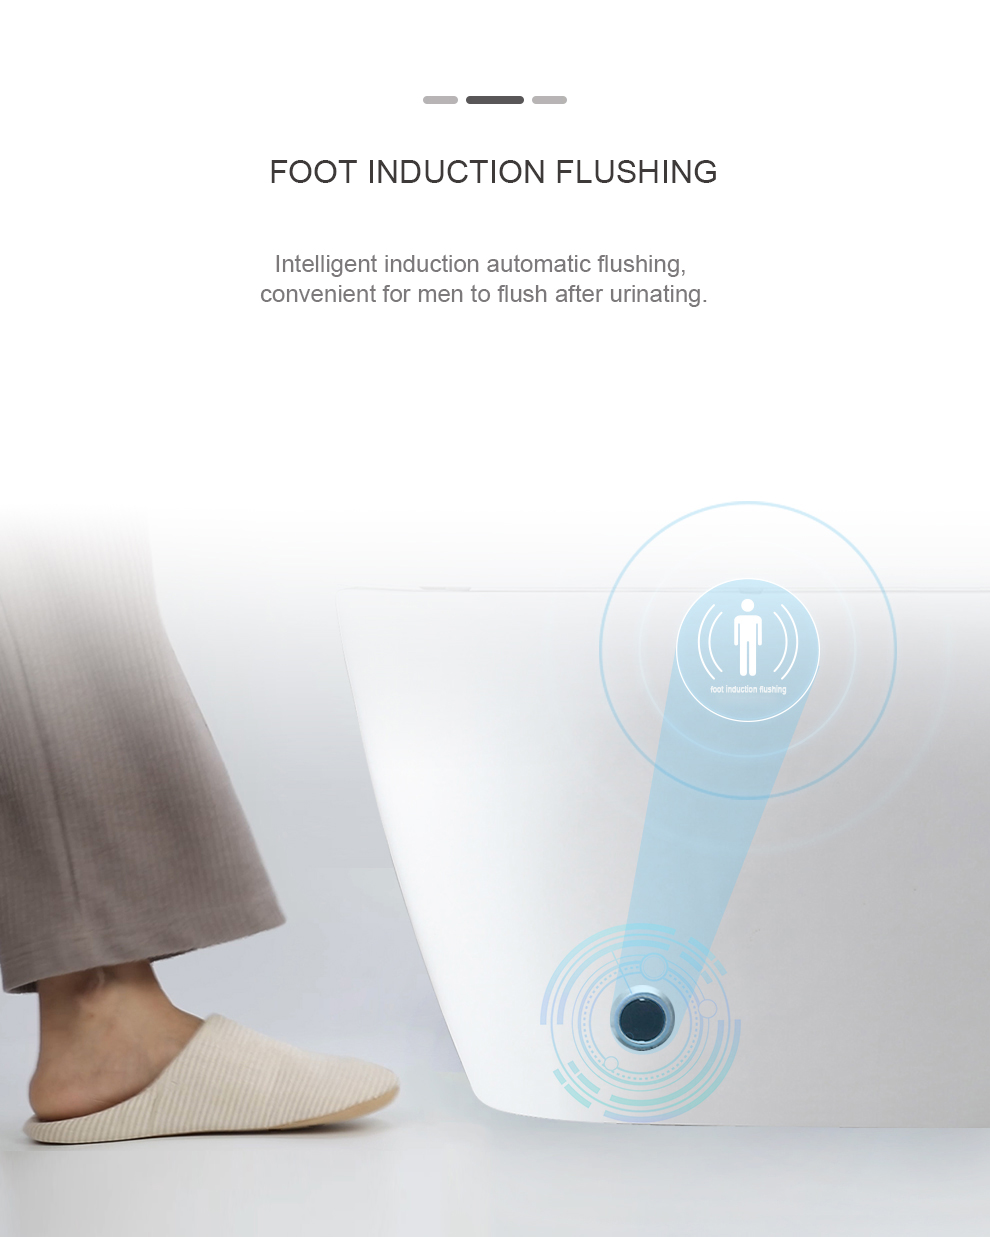 Foot induction smart toilet